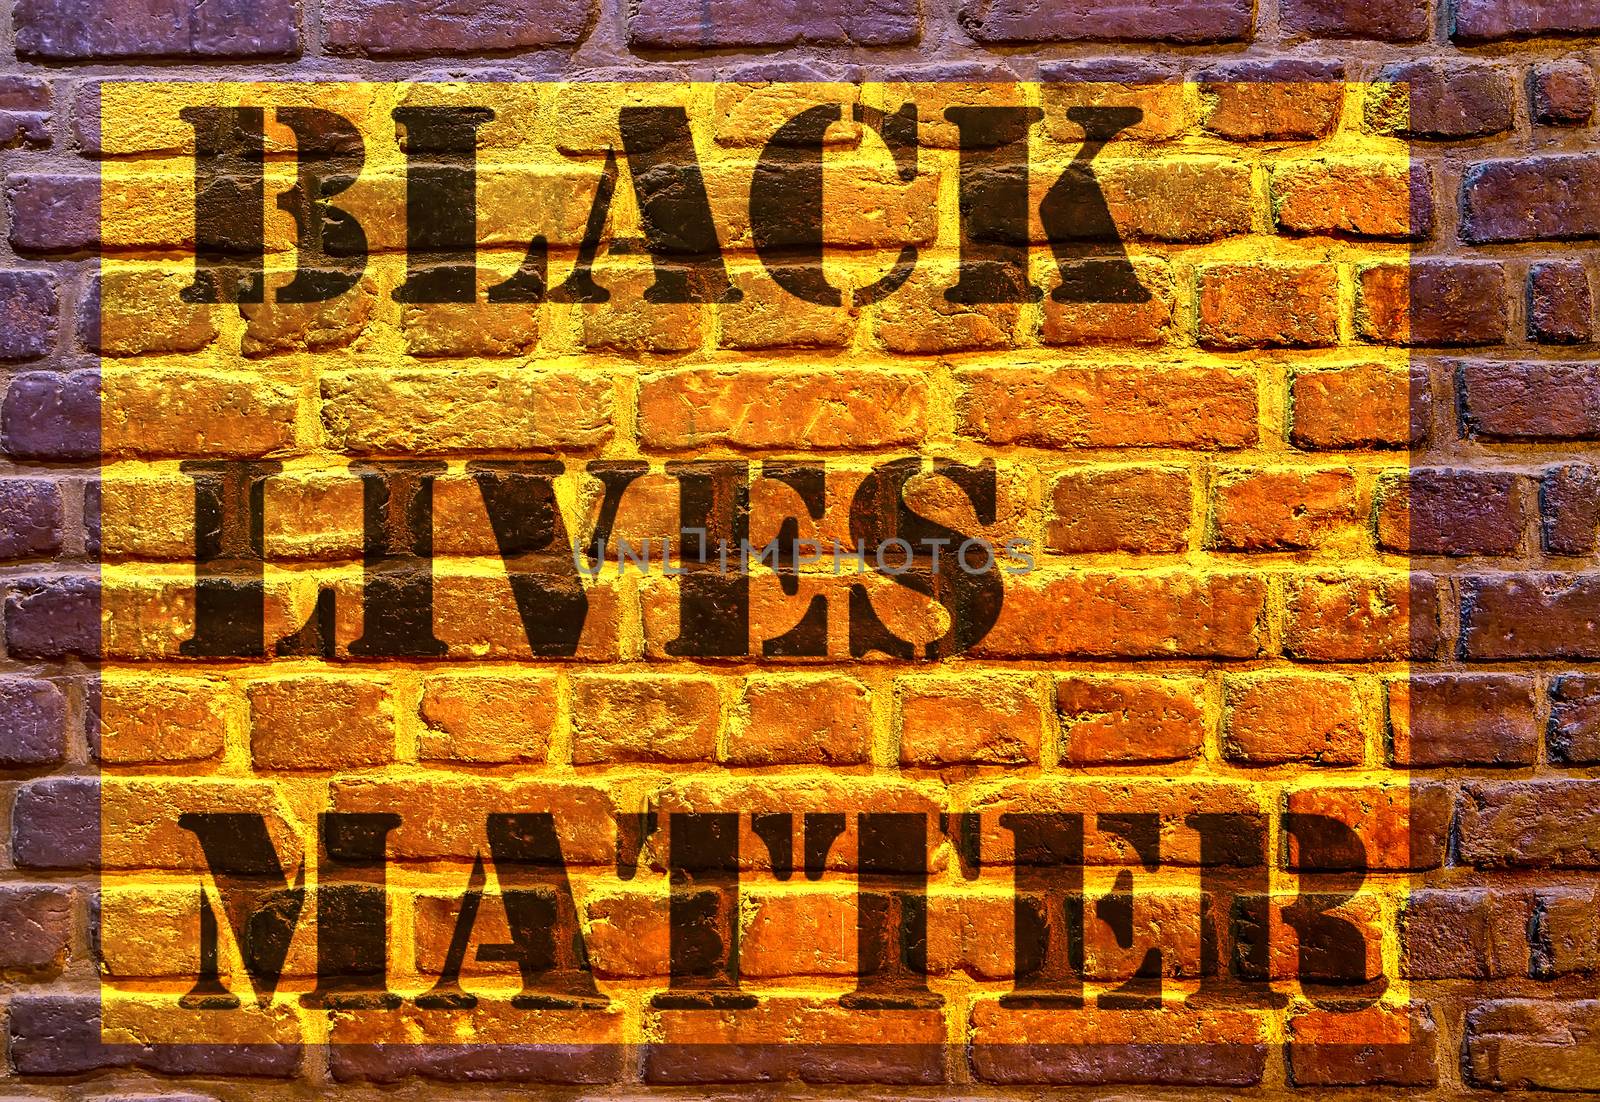 Black Lives Matter slogan text liberation banner designs stencil yellow stencil Old brick wall background texture stone